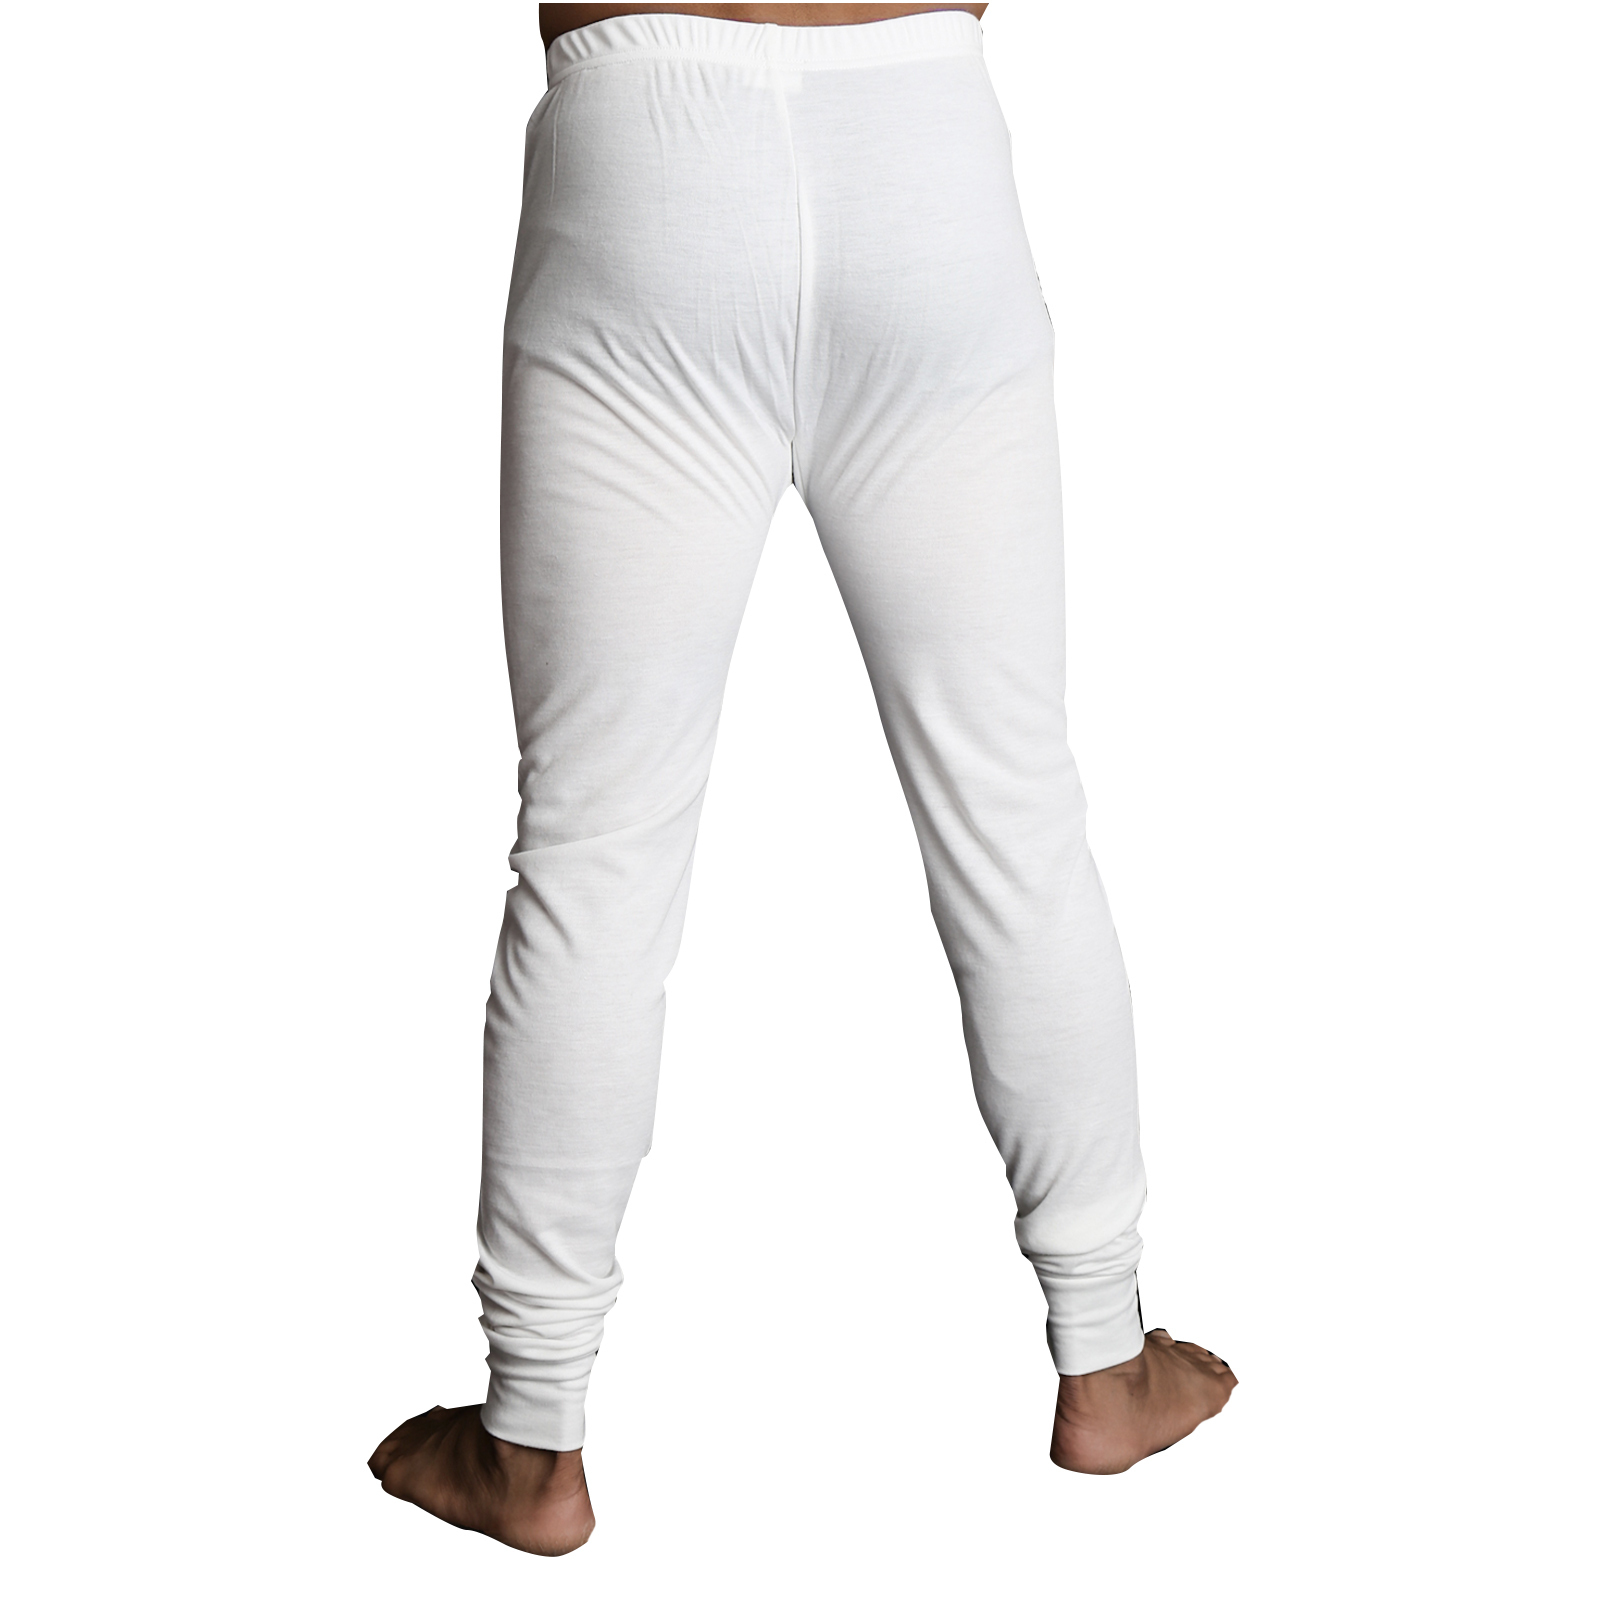 Thermal Underwear Mens Pure Merino Wool Long John - GreyMarle